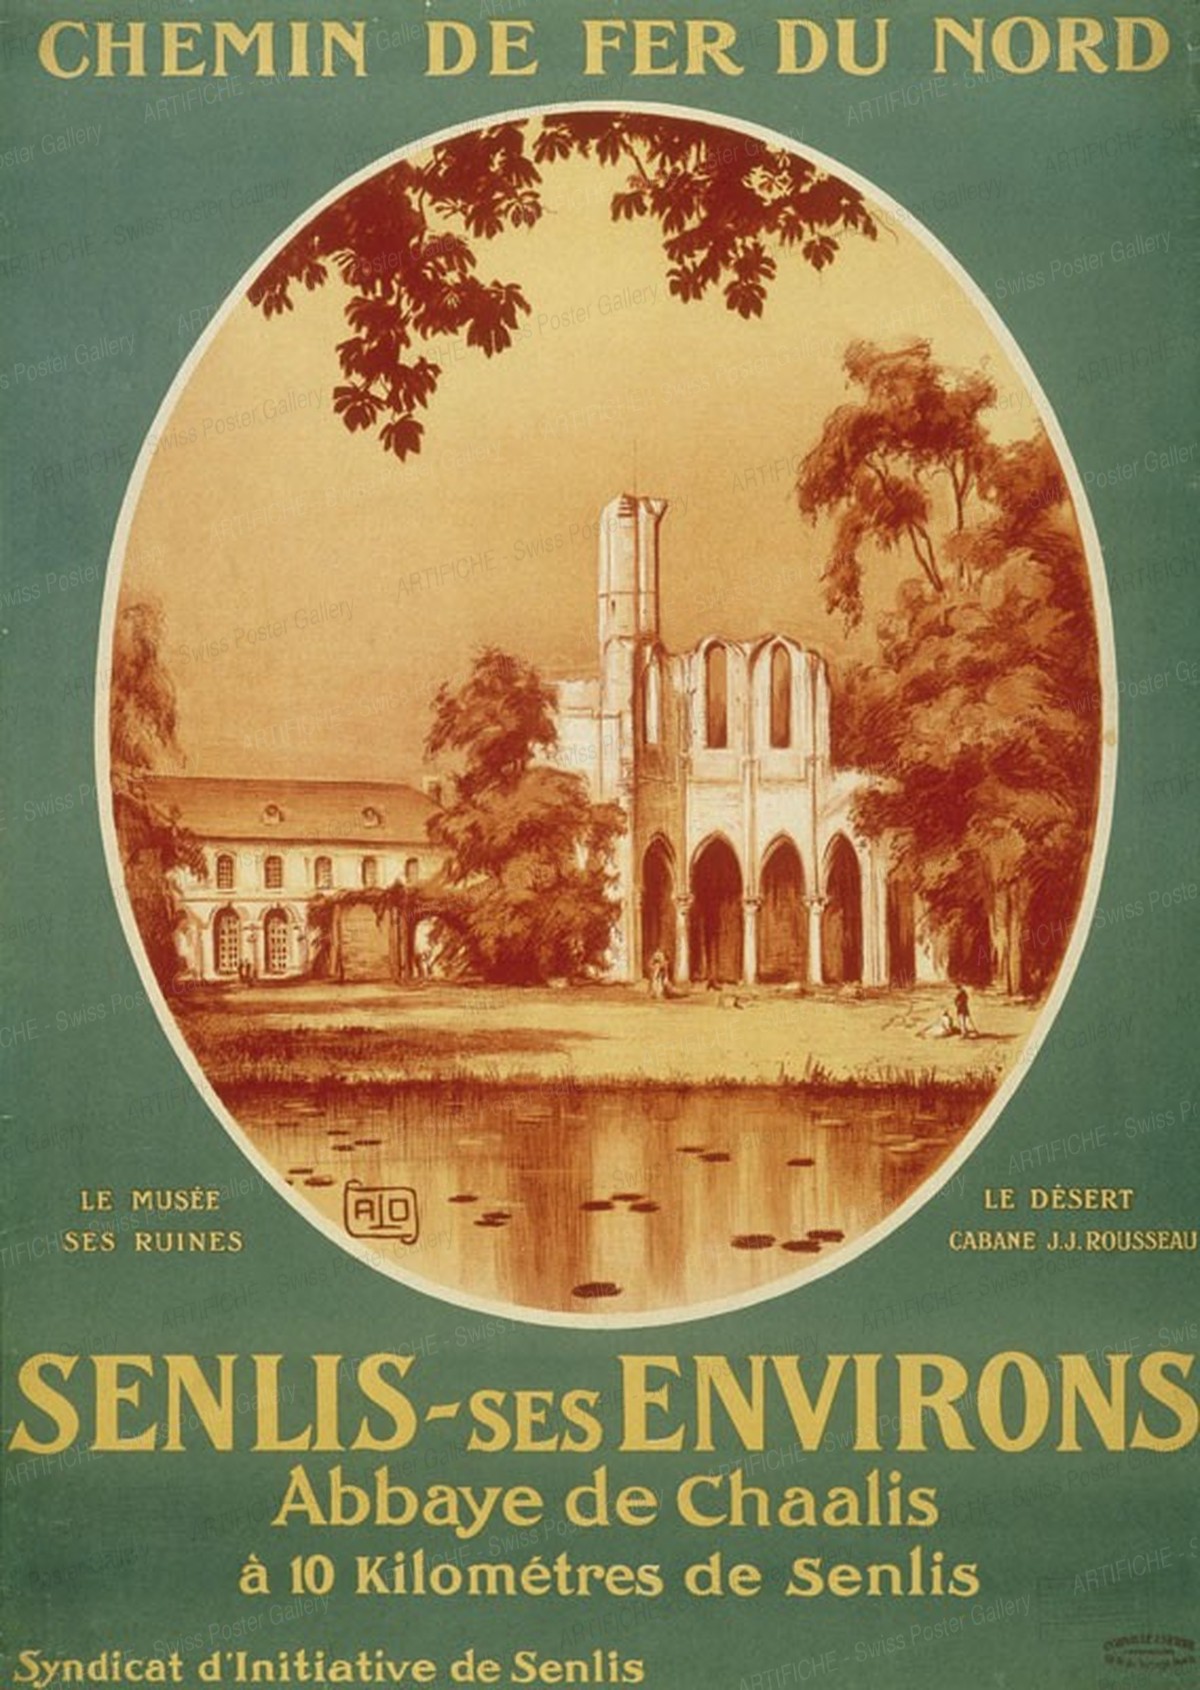 Chemin de Fer du Nord – Senlis – ses environs – Abbaye de Chaalis, Alo